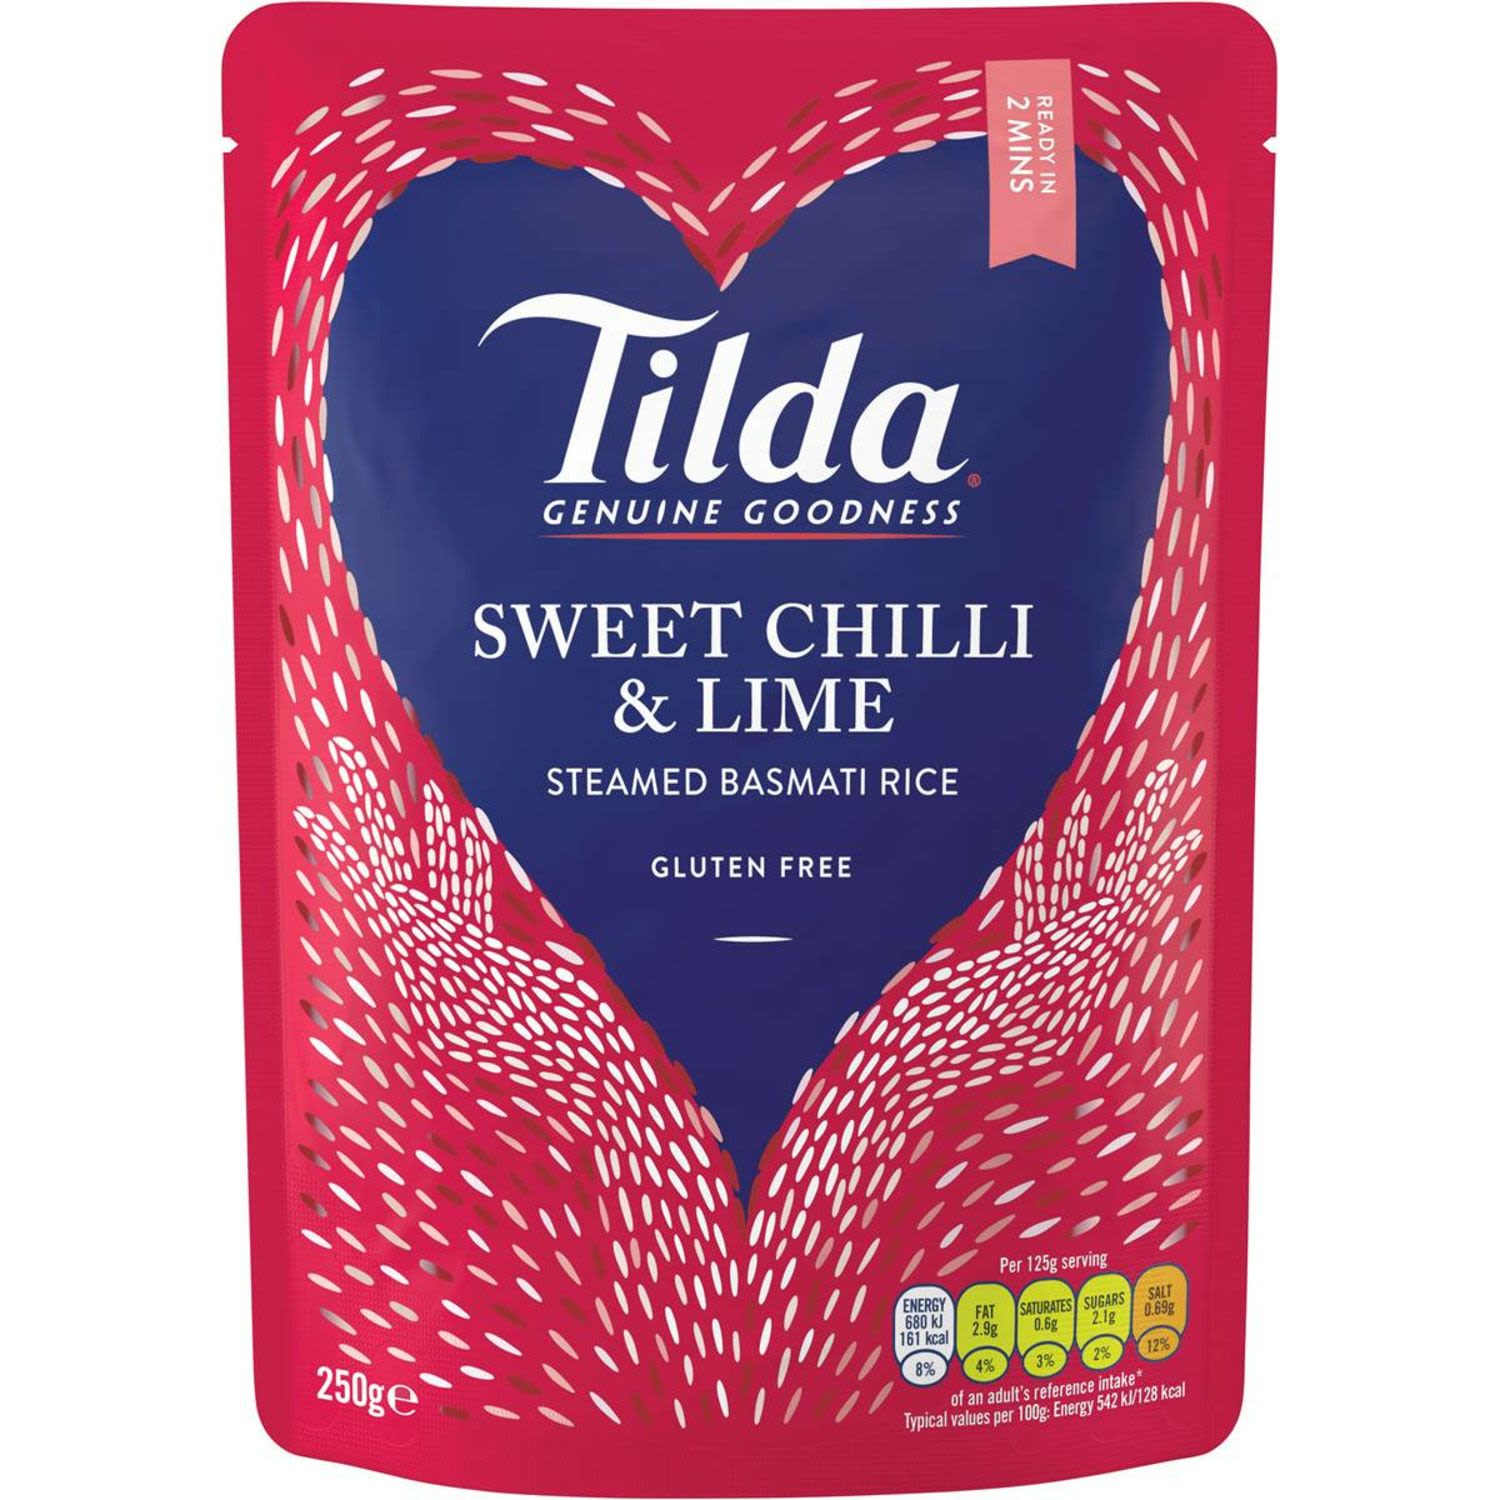 Tilda Sweet Chilli & Lime Steamed Basmati Rice, 250 Gram